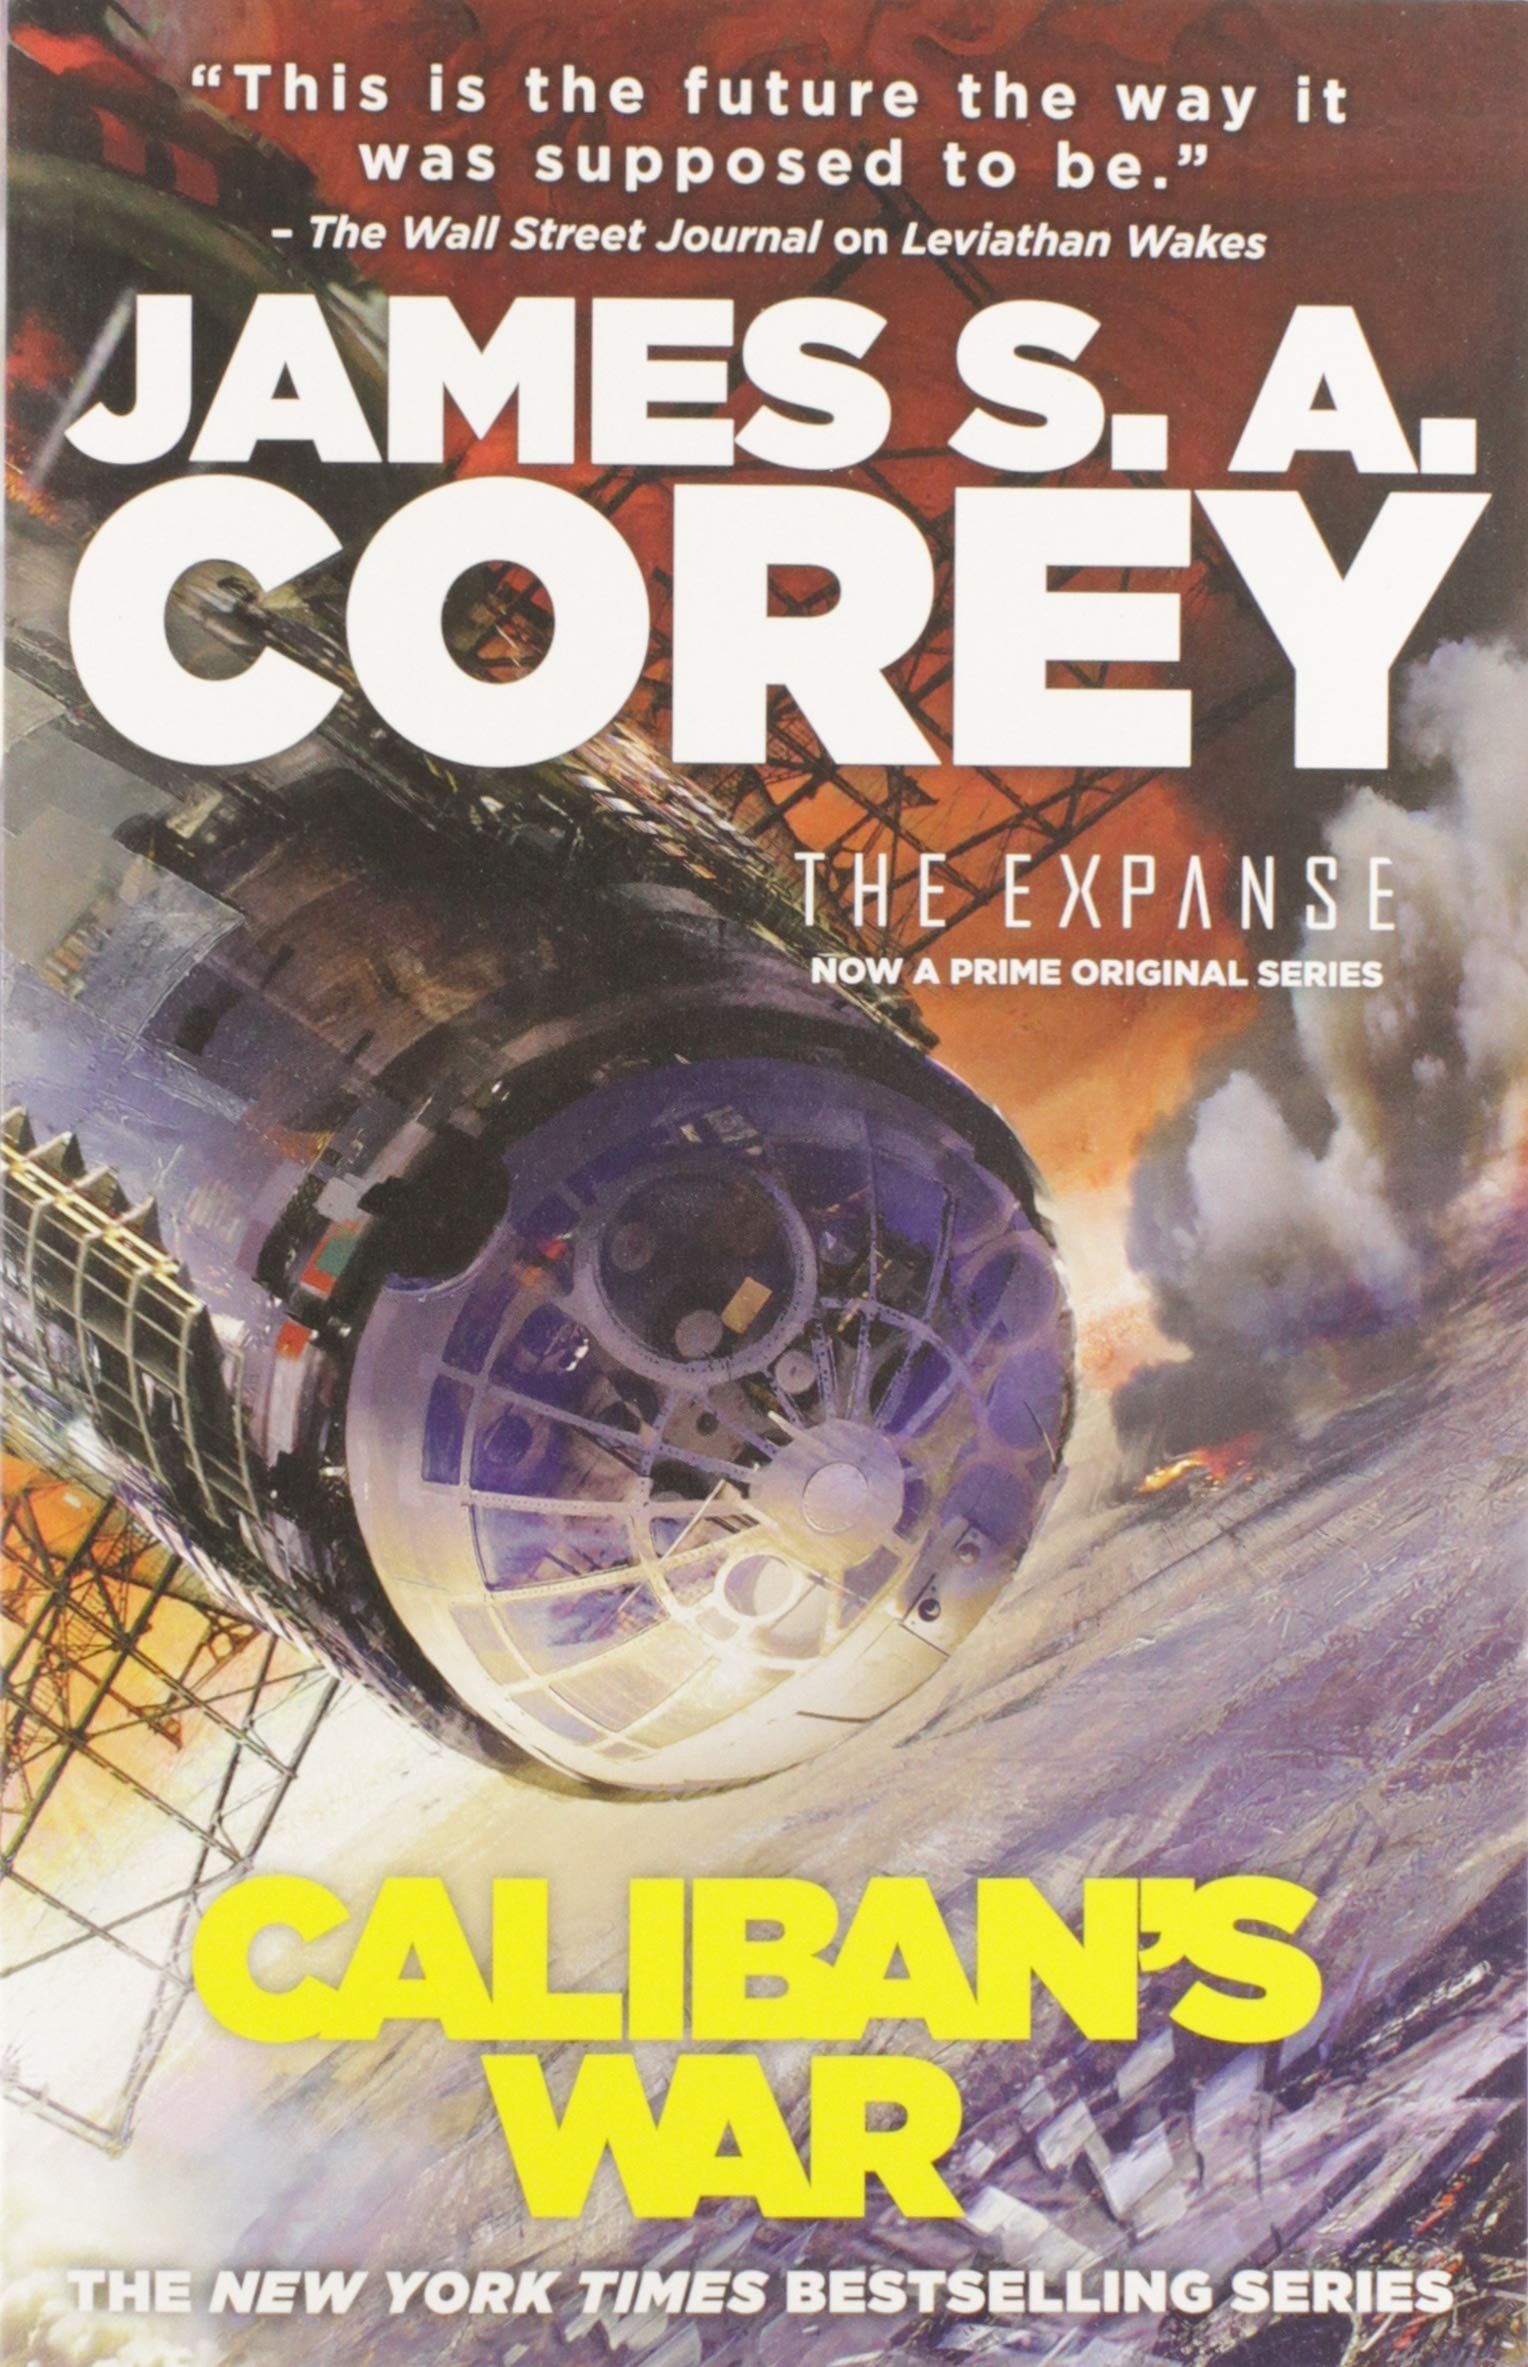 James S. A. Corey: Caliban's war (2012, Orbit)